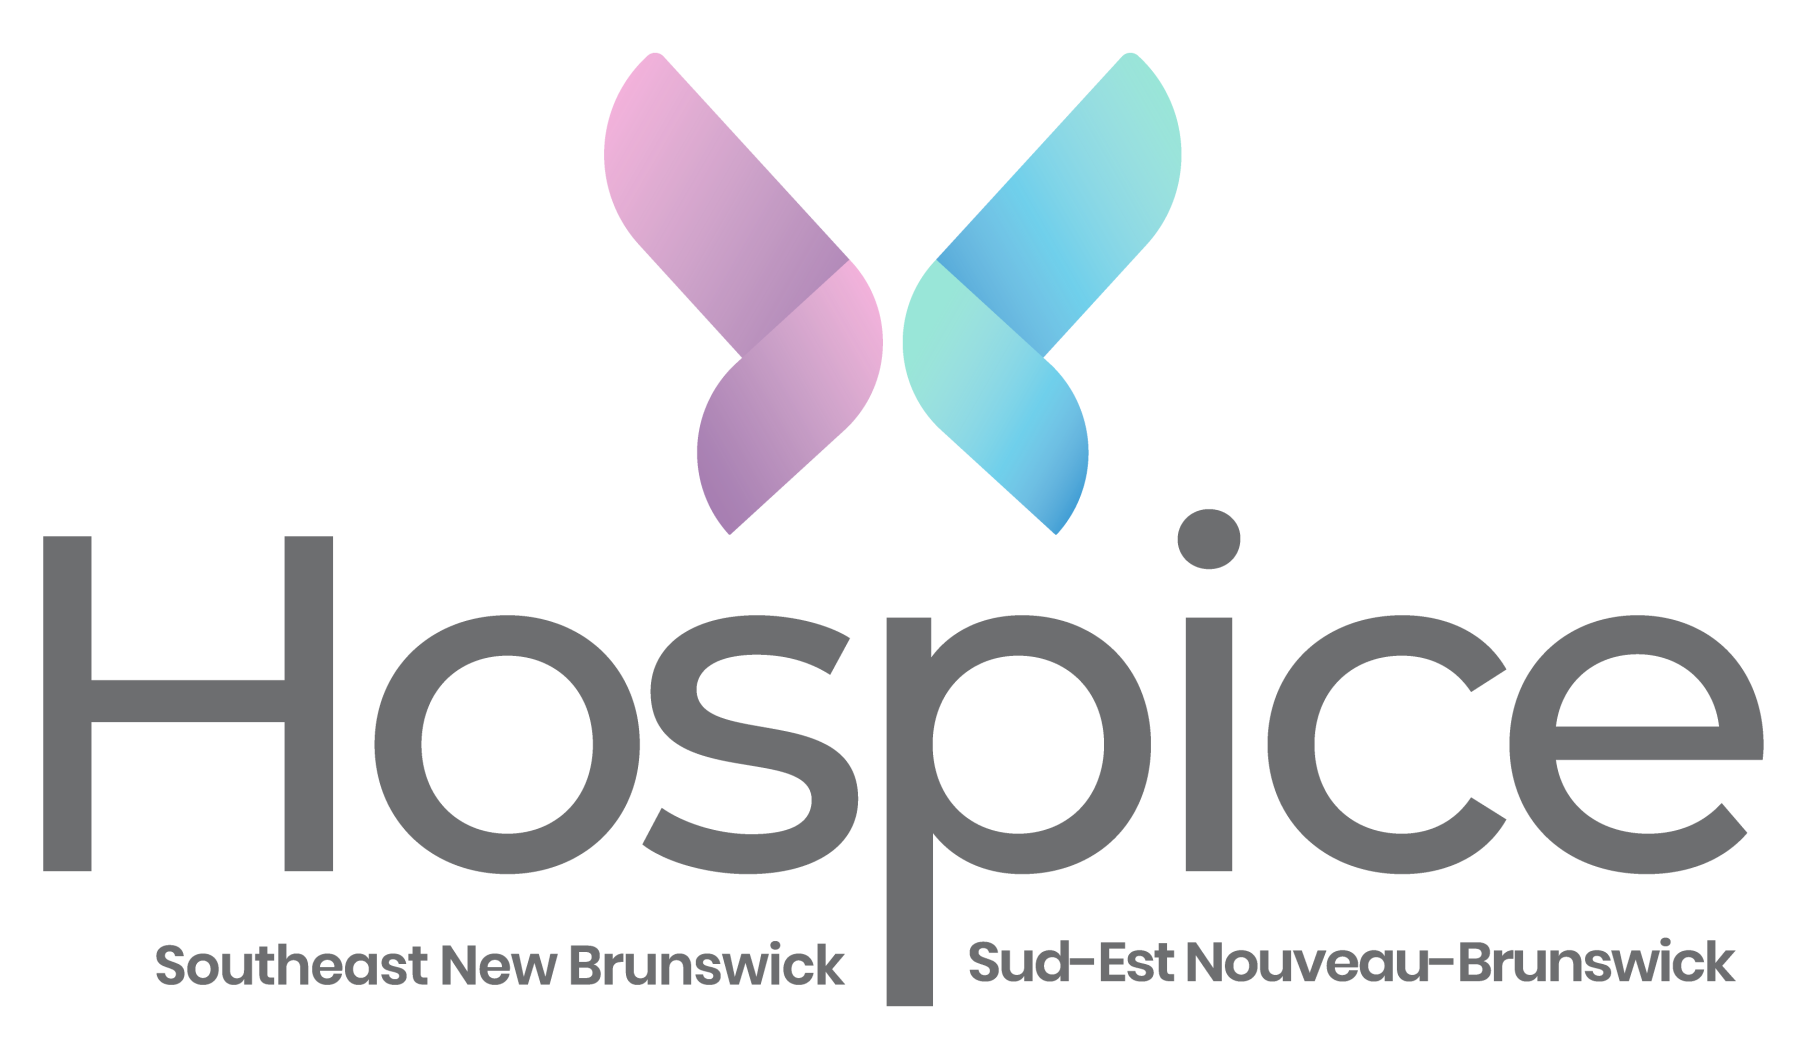 Hospice South East New Brunswick logo